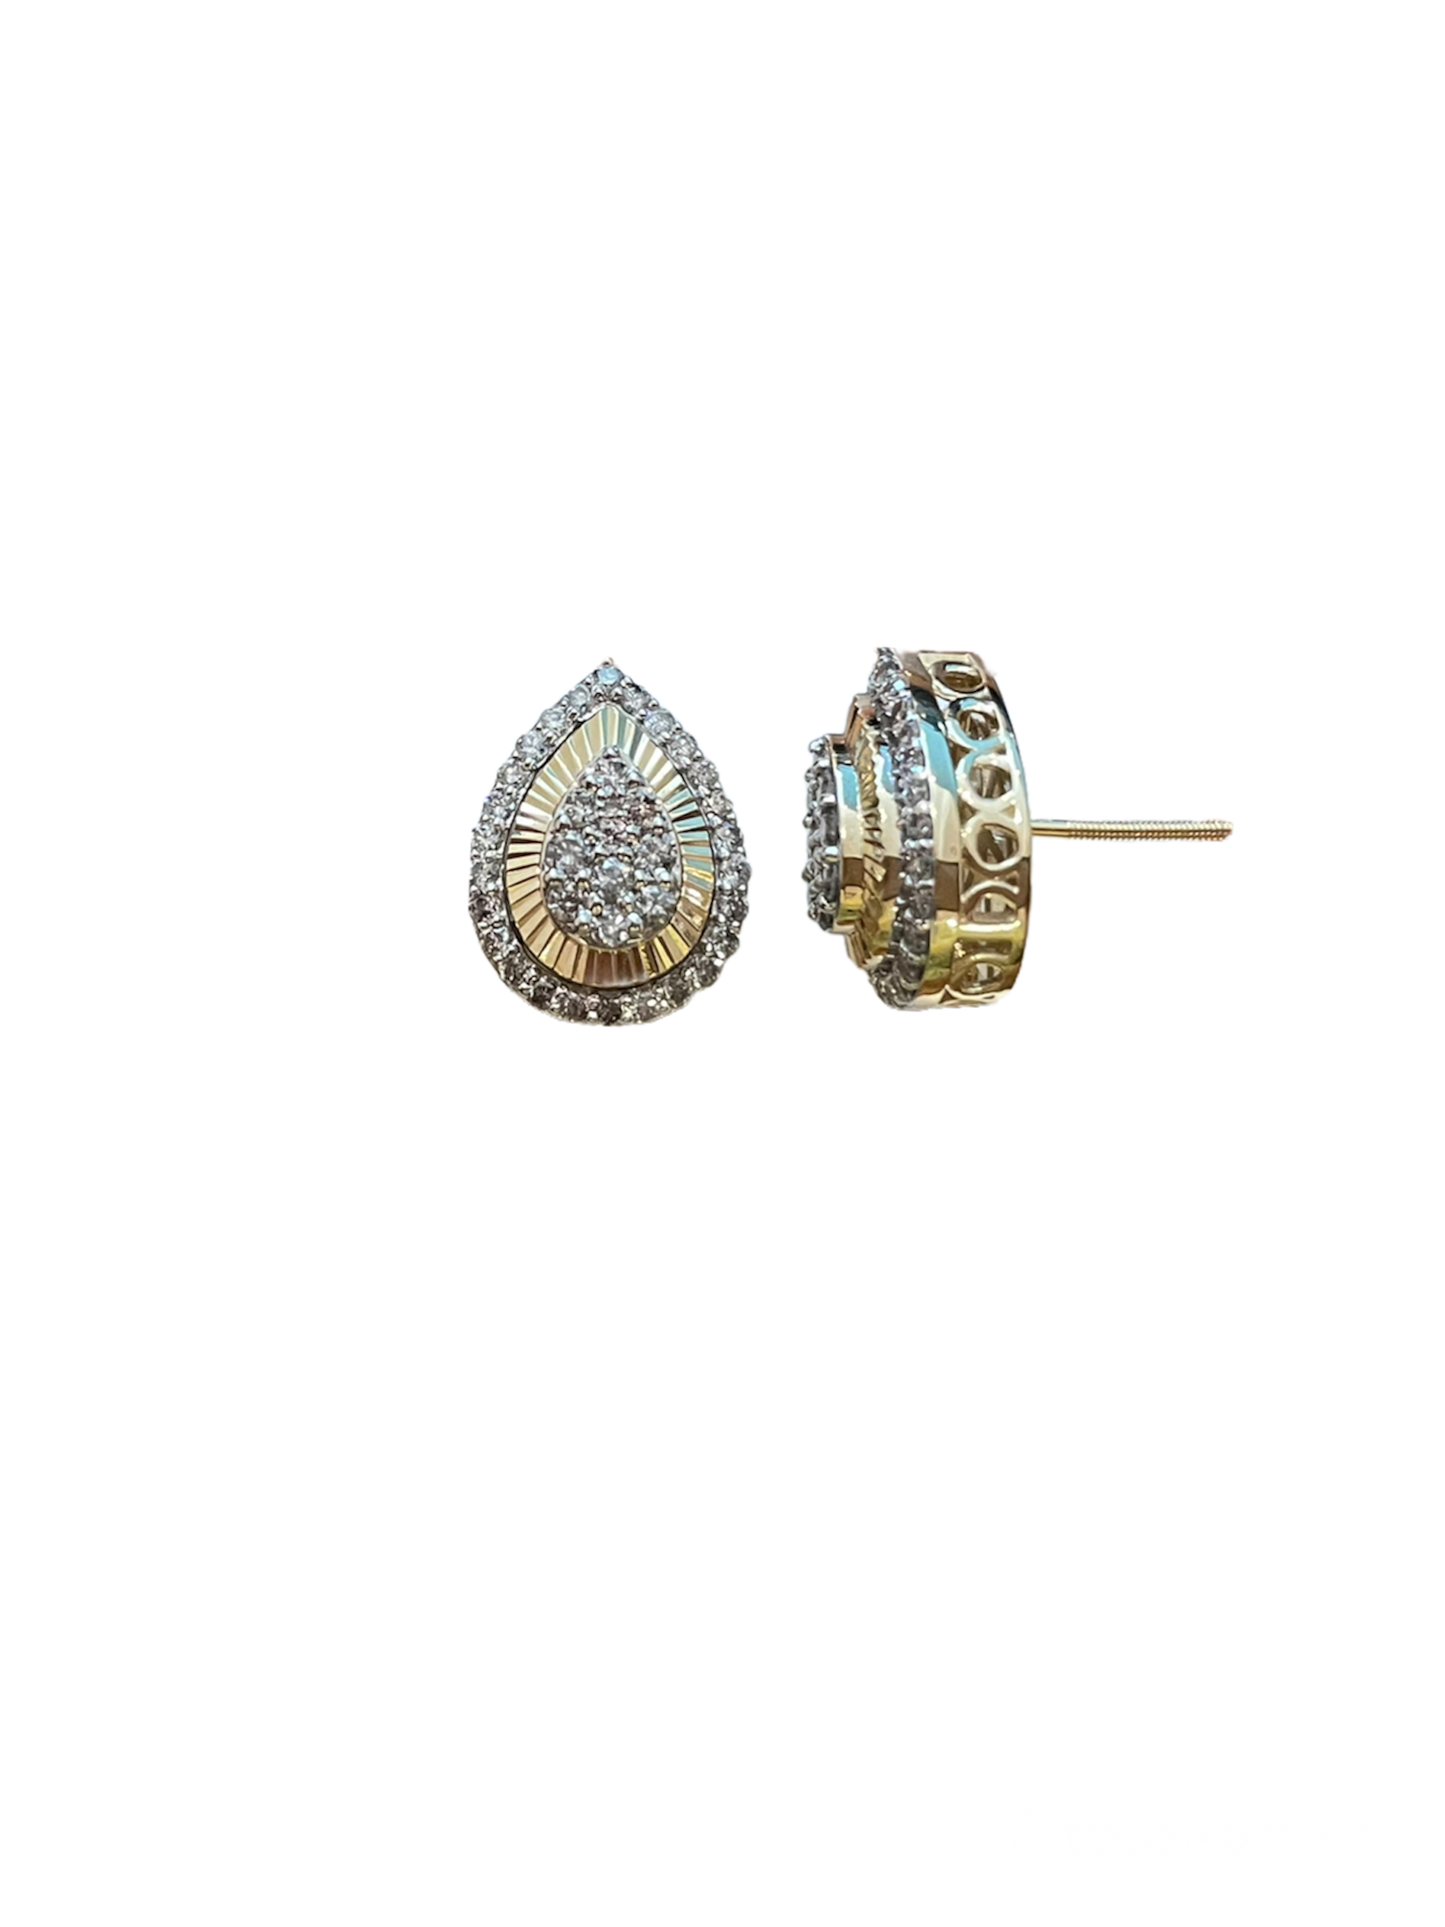 Men's Pear Shaped Diamond Stud Earrings - 1.06 Carats in 10KT Yellow Gold